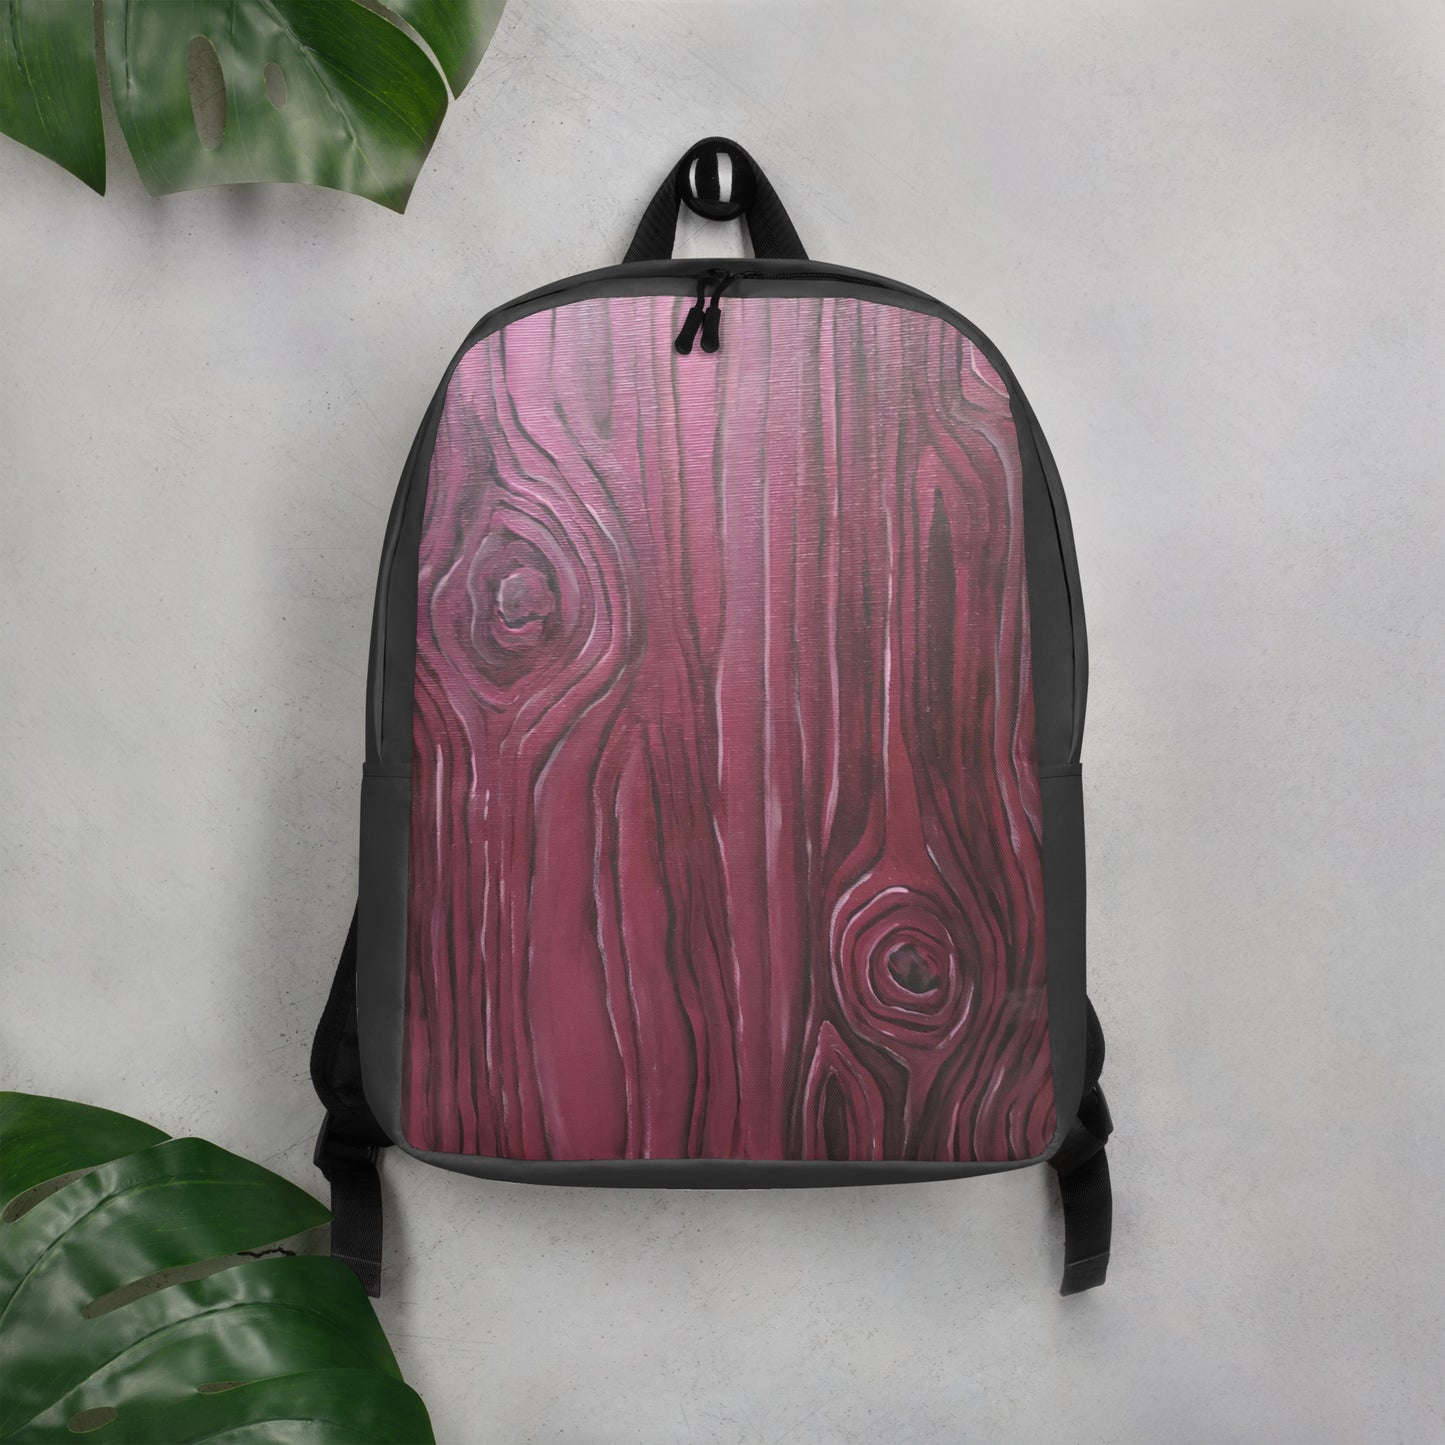 Wood Grain in Pink and Black Minimalist Backpack